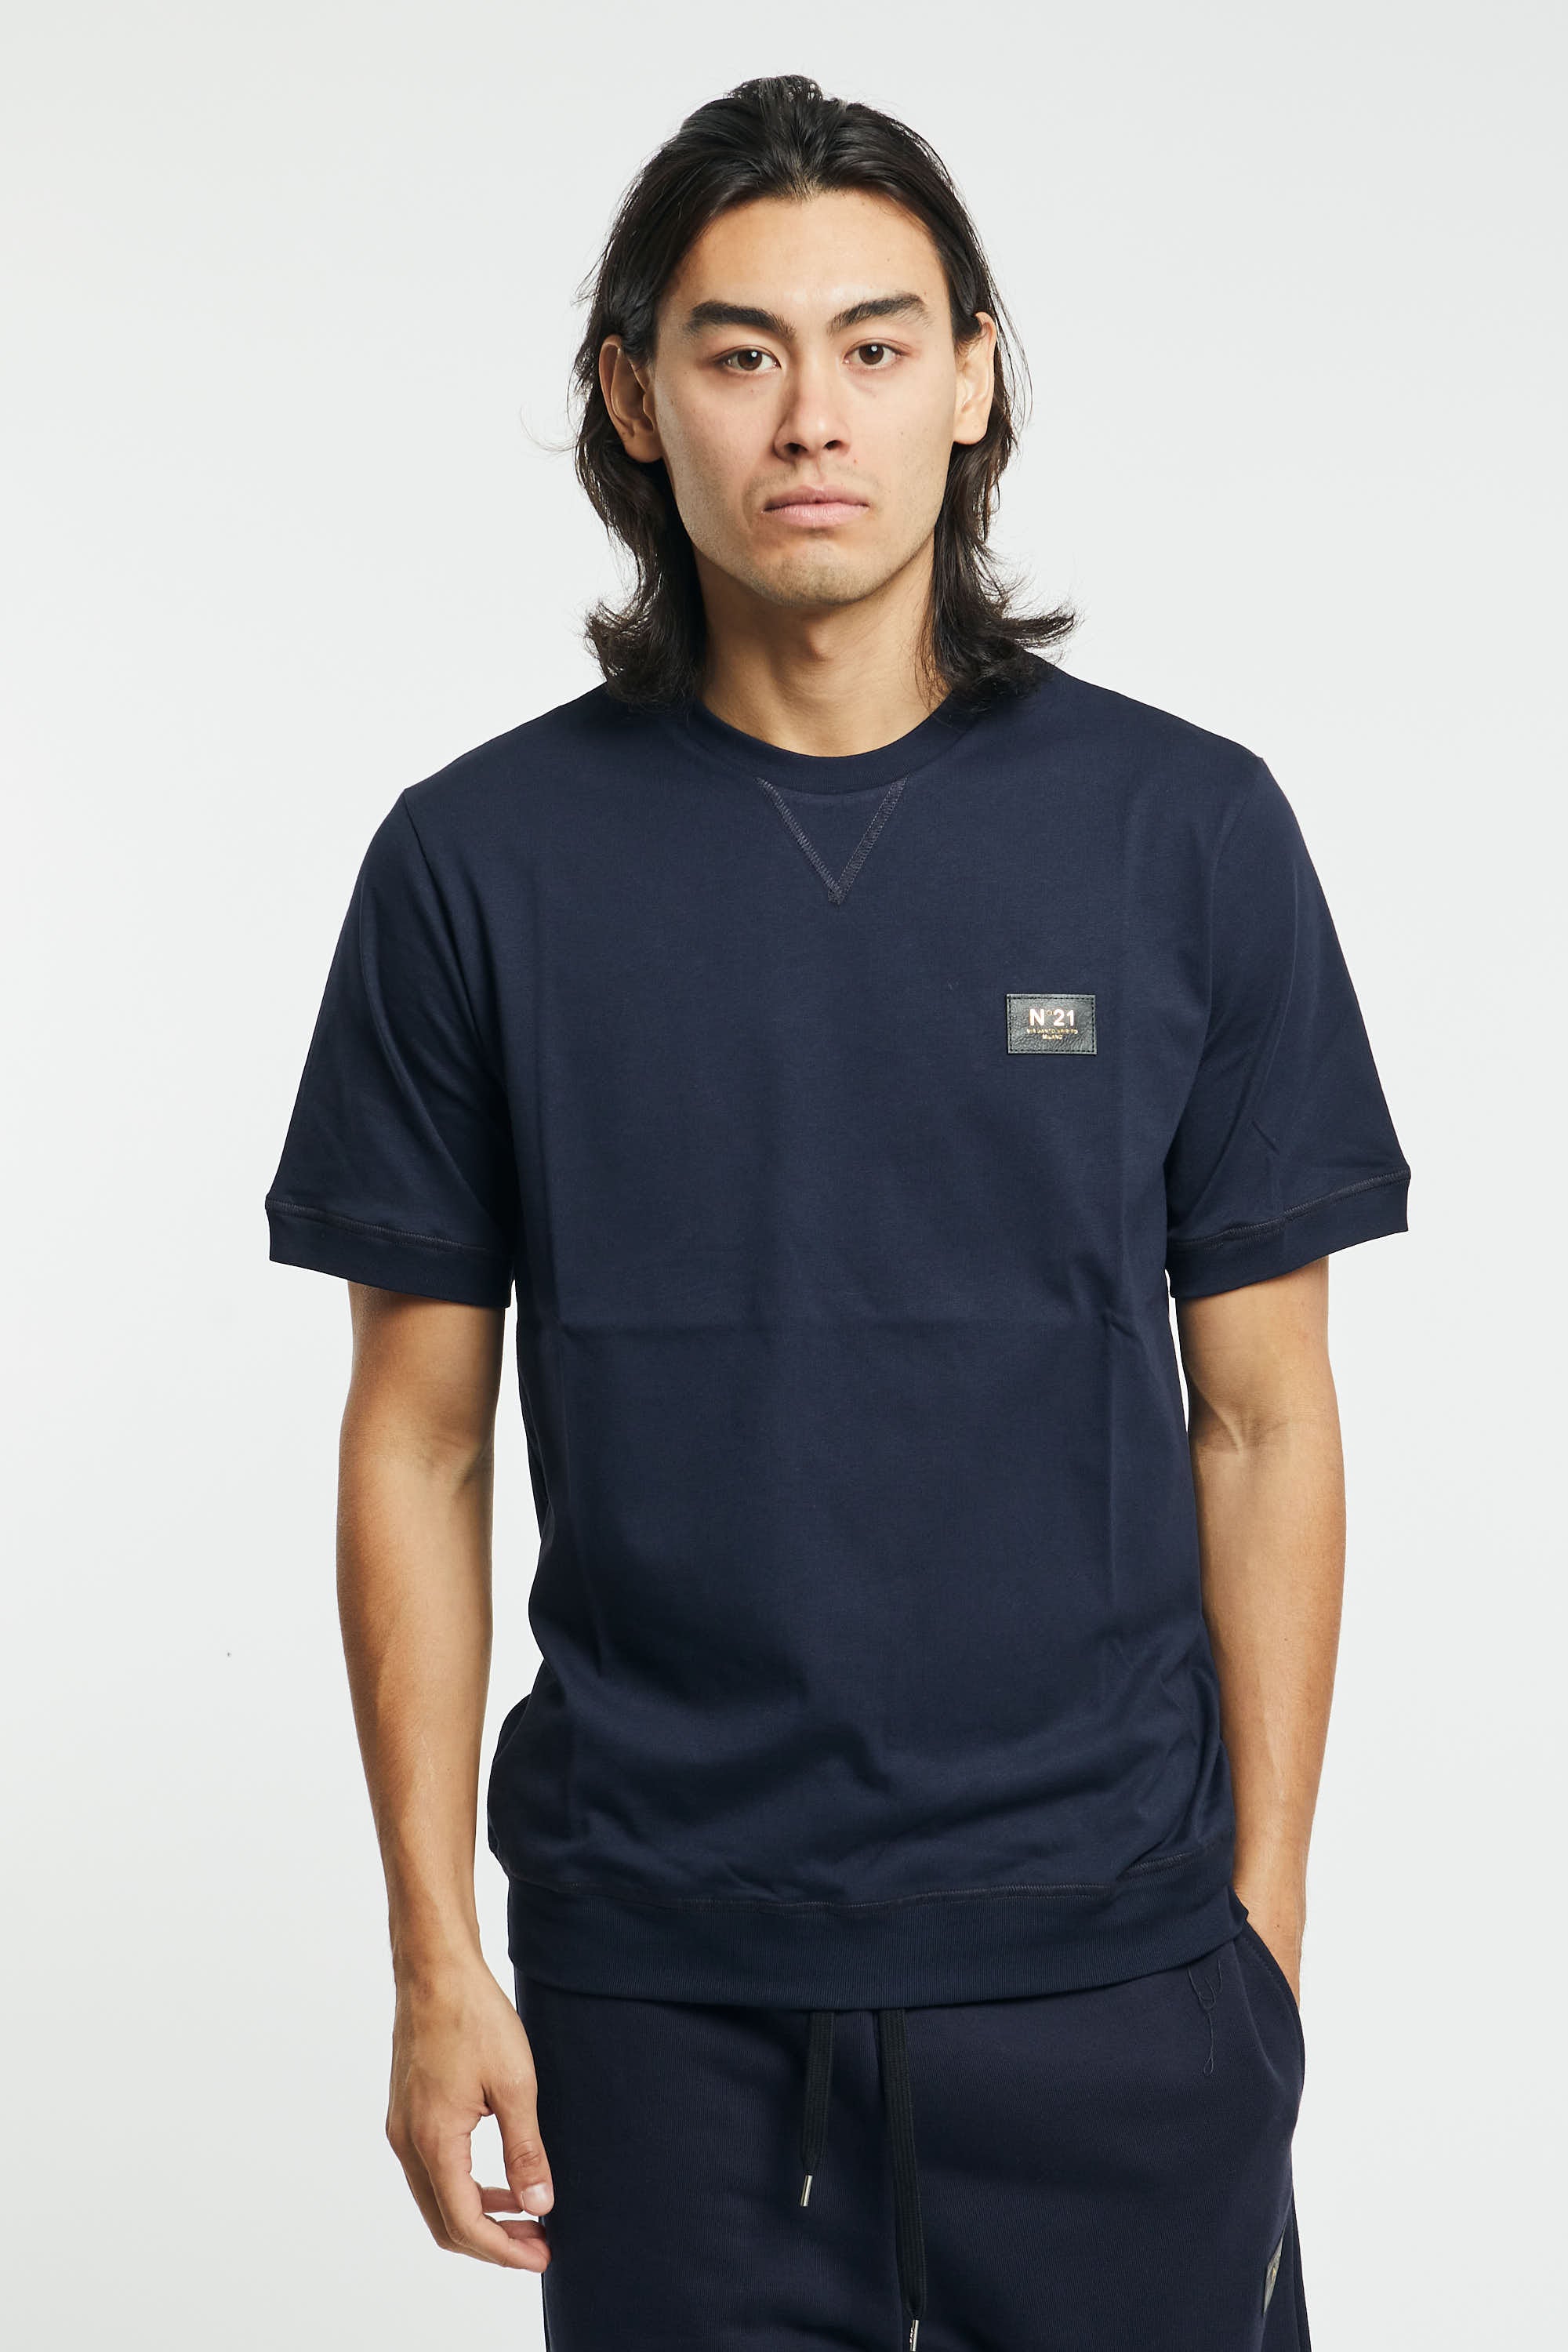 N°21 Cotton/Eco-leather Blue T-Shirt - 1